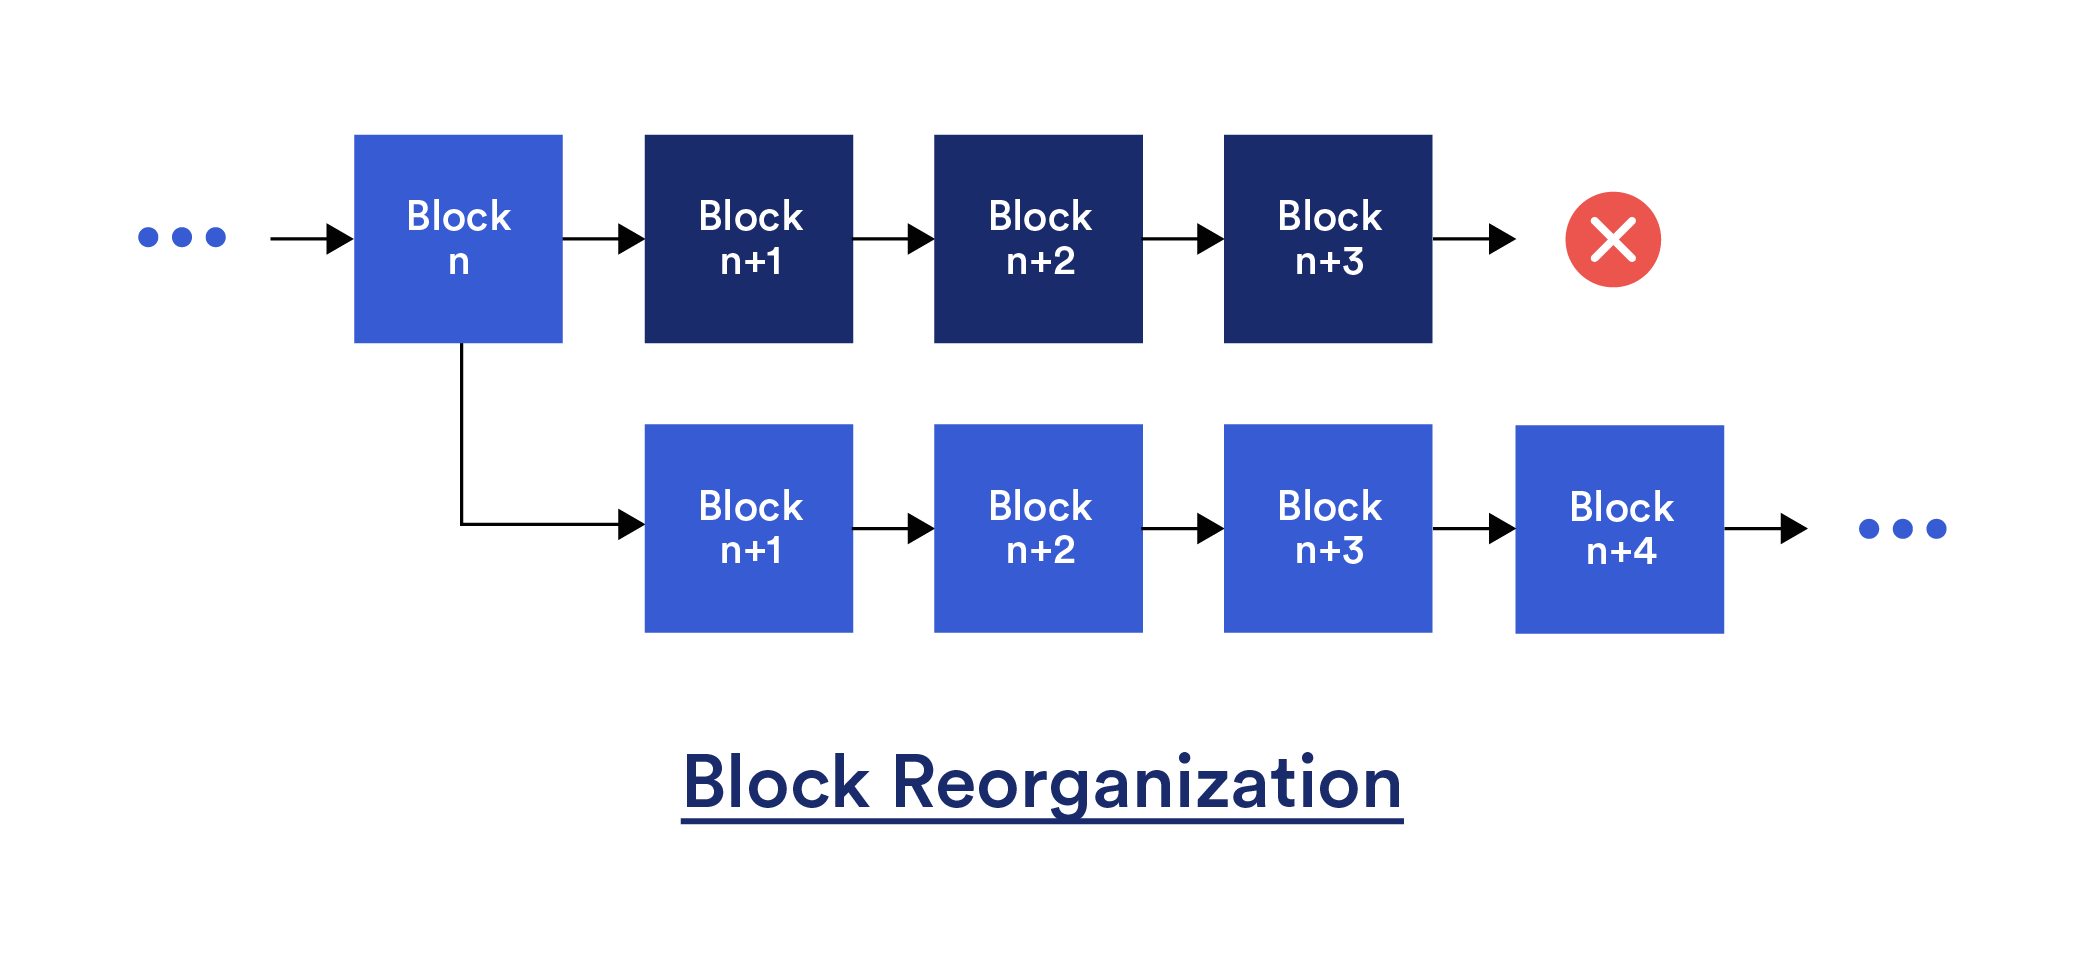 A blockchain block reorganization